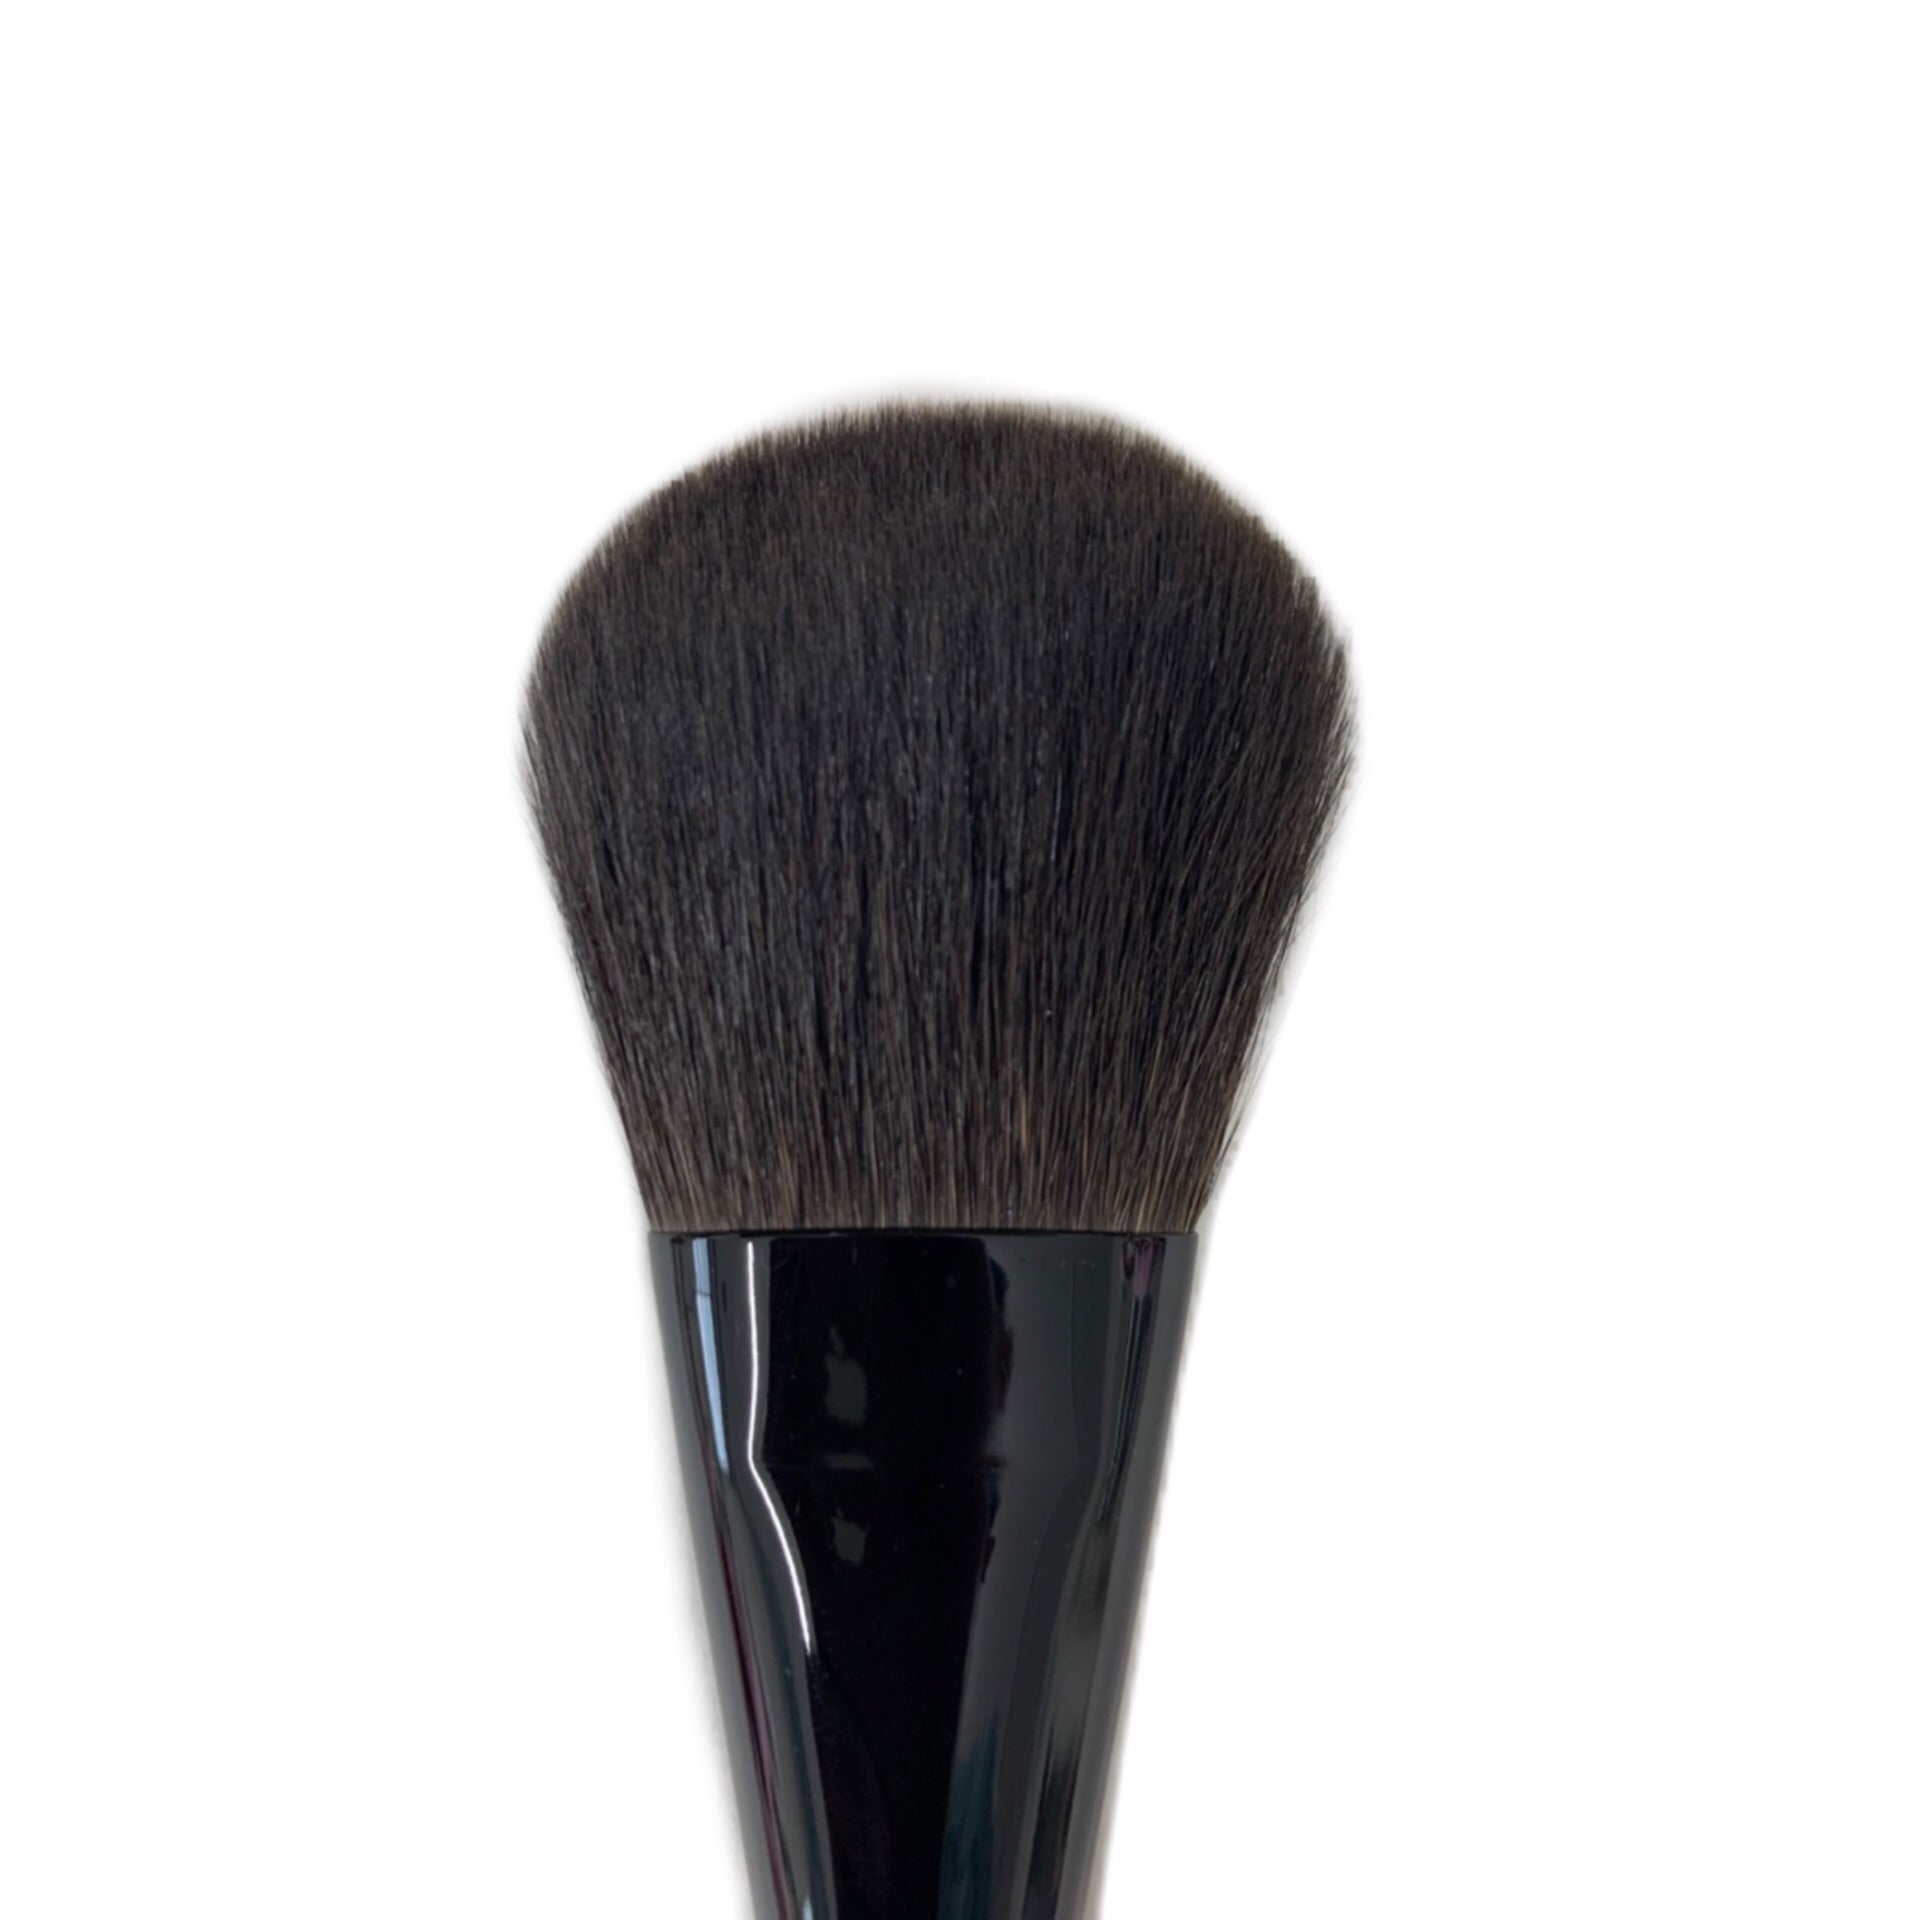 Koyudo Sakura Makie Face Brush (Black) - Fude Beauty, Japanese Makeup Brushes